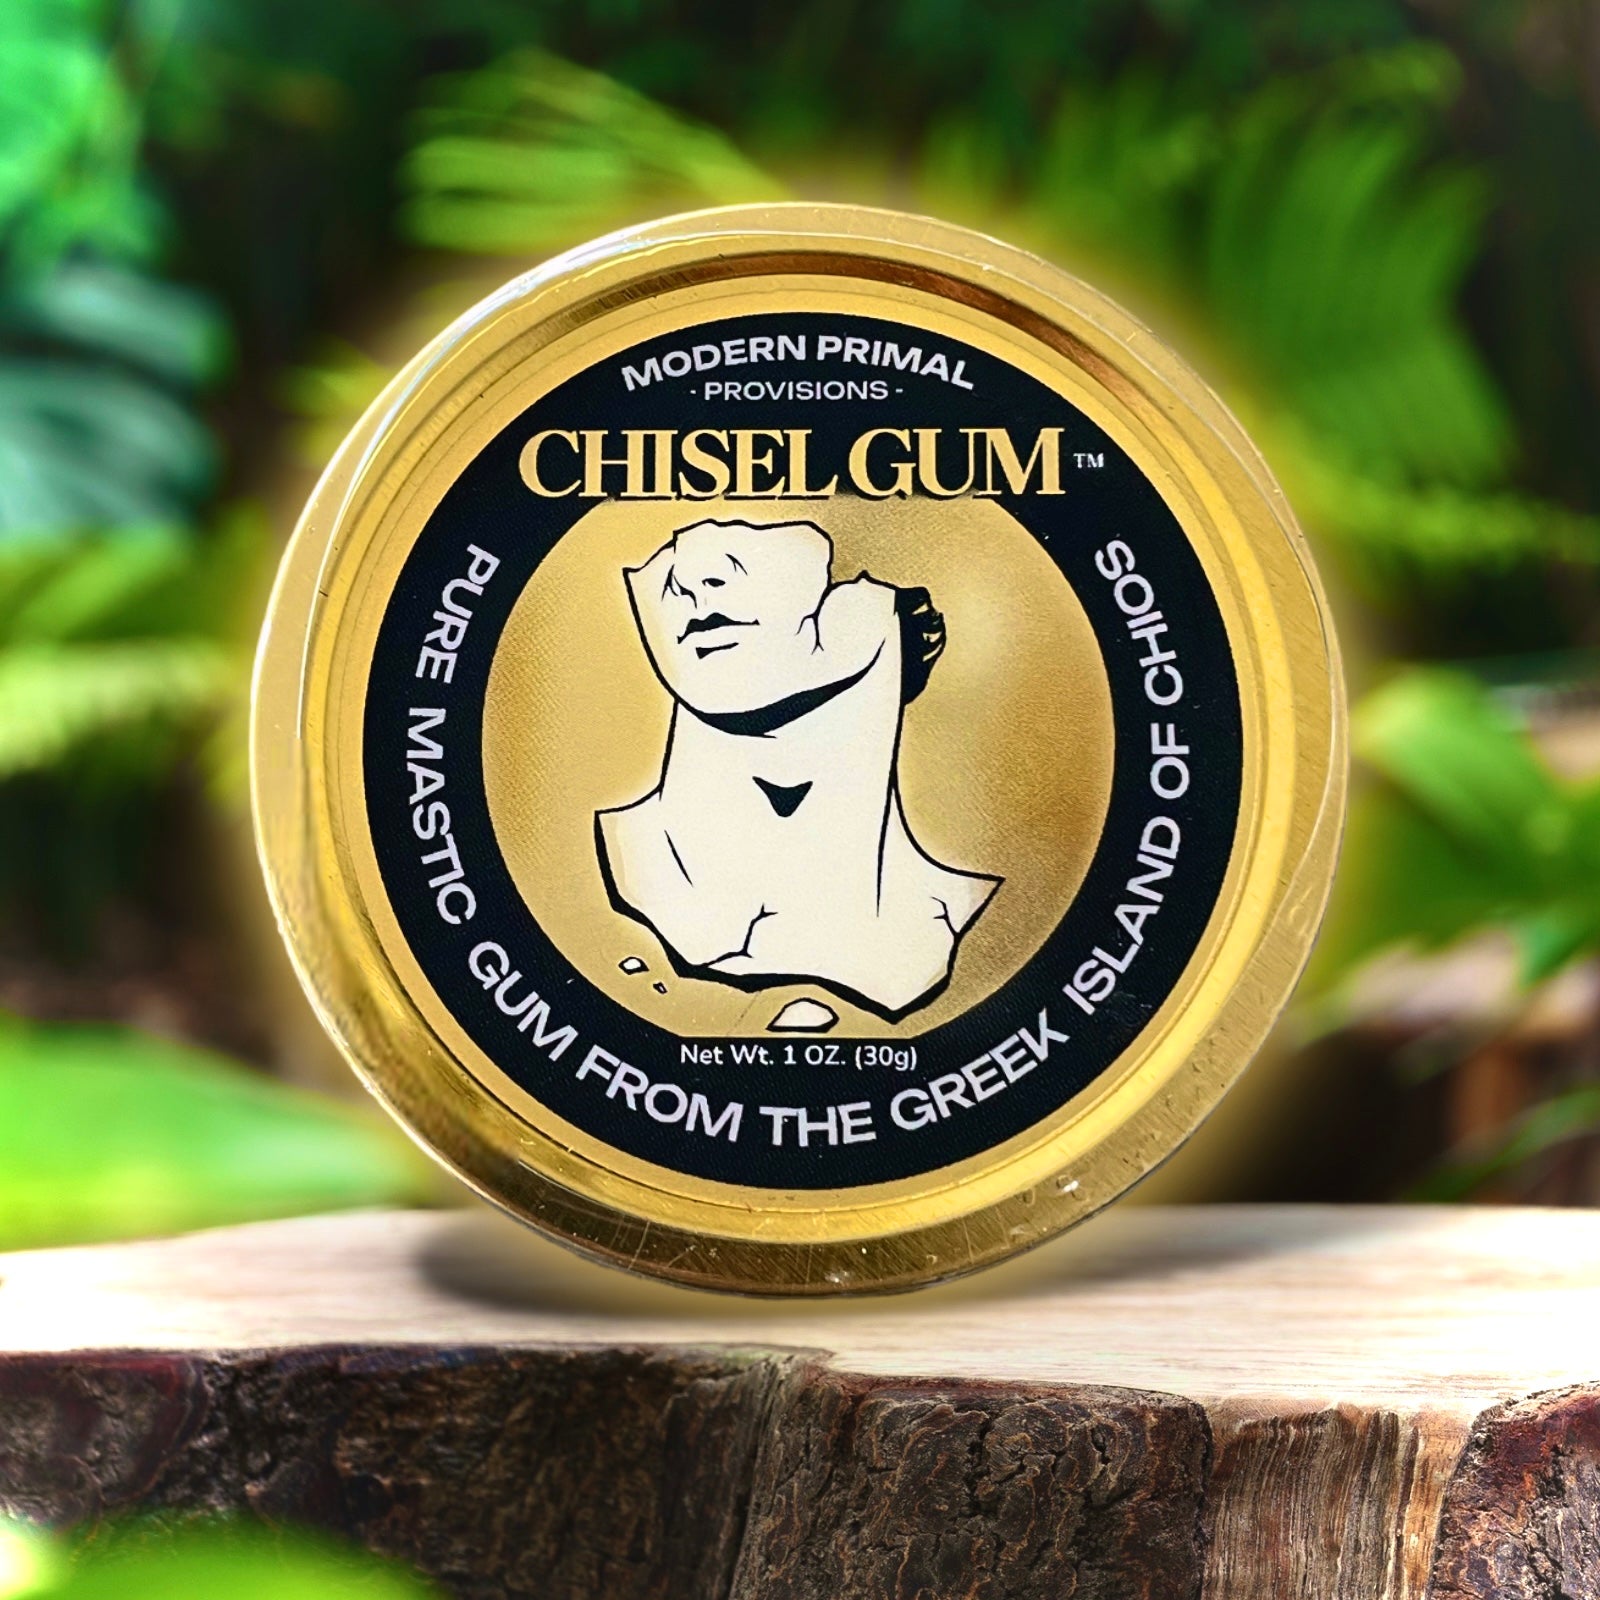 Chisel Gum – Modern Primal Provisions